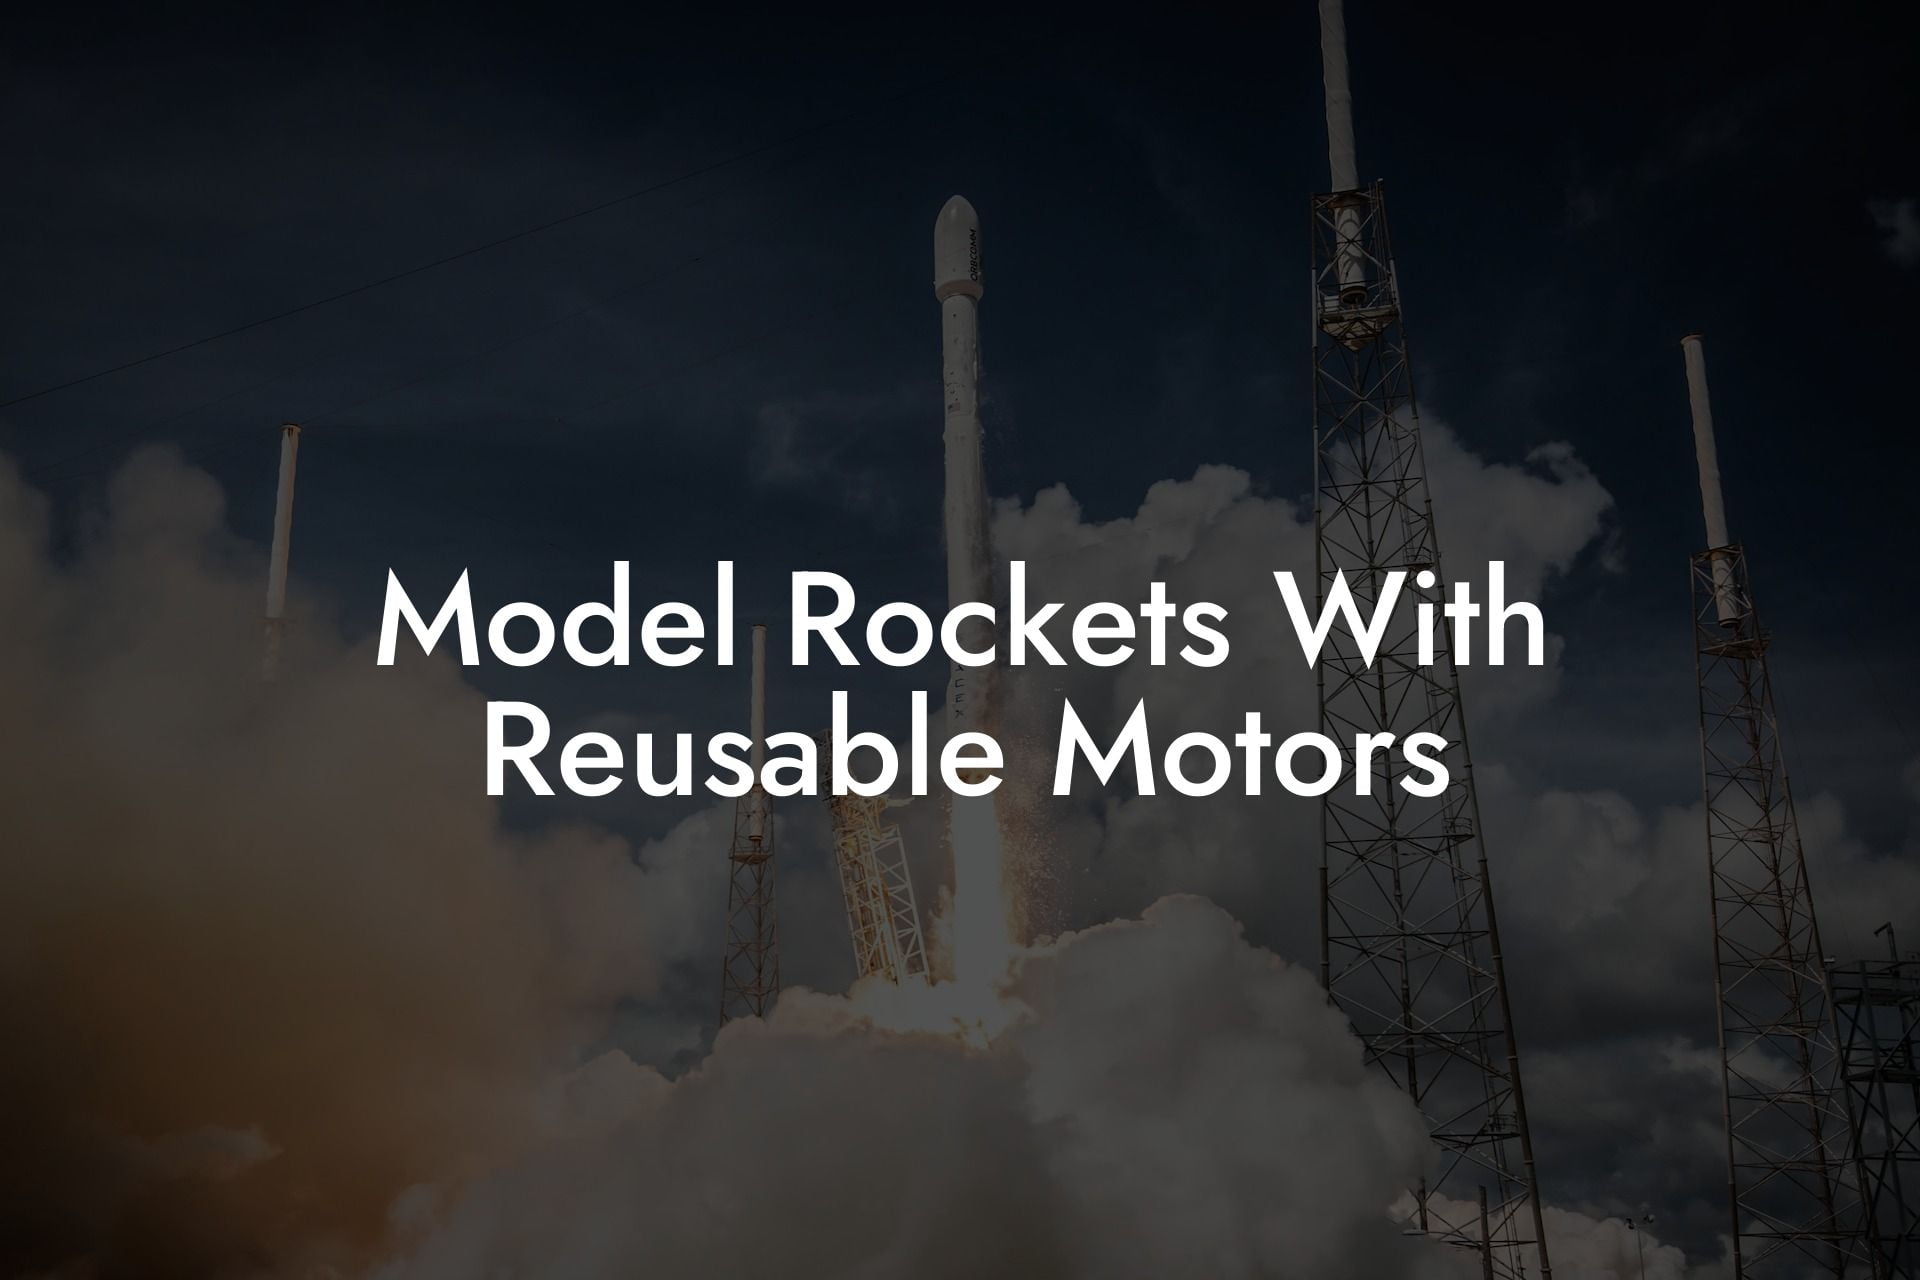 Model Rockets With Reusable Motors